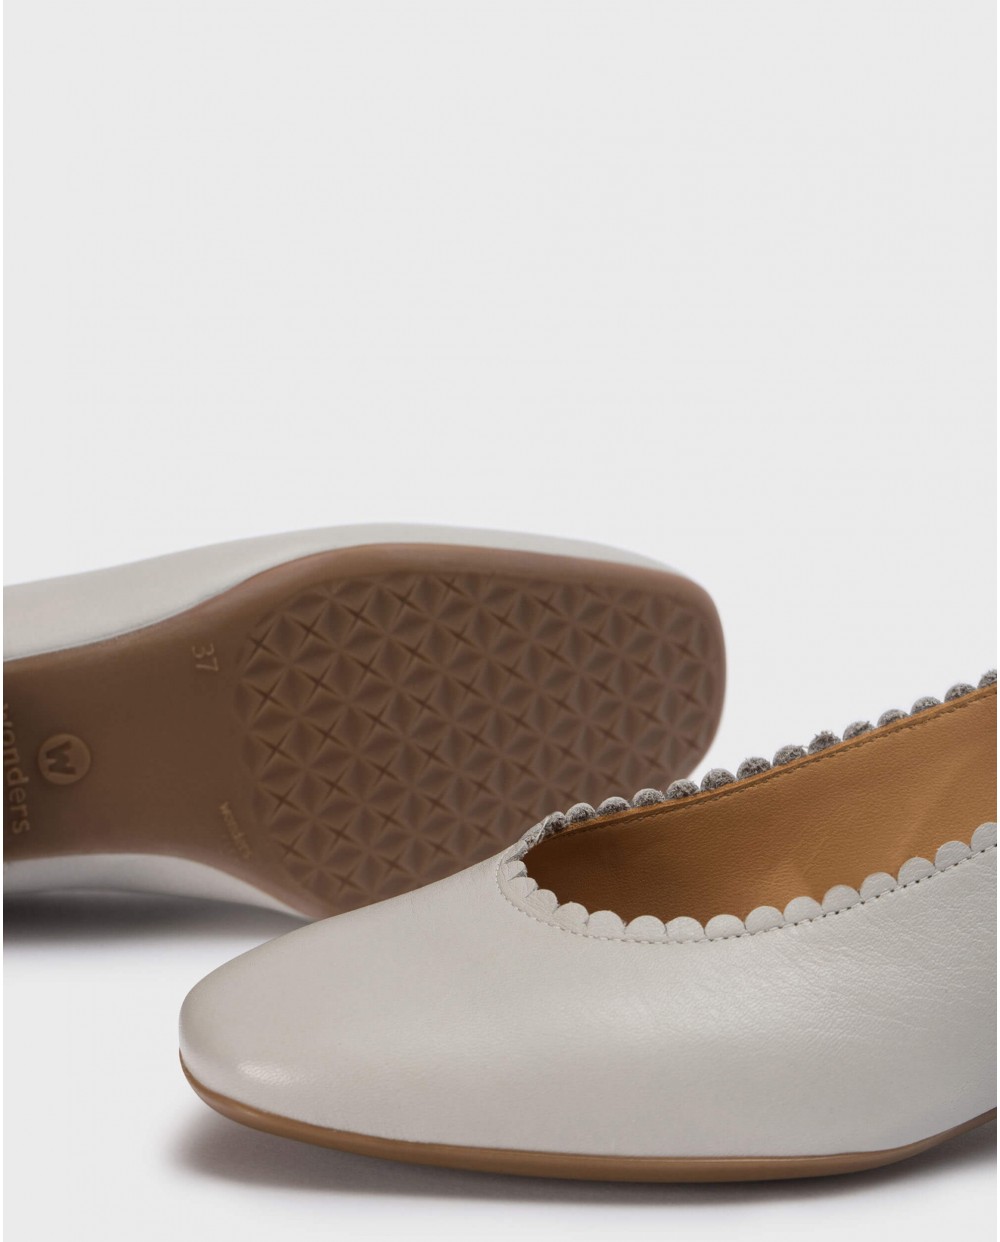 Circular leather shoe